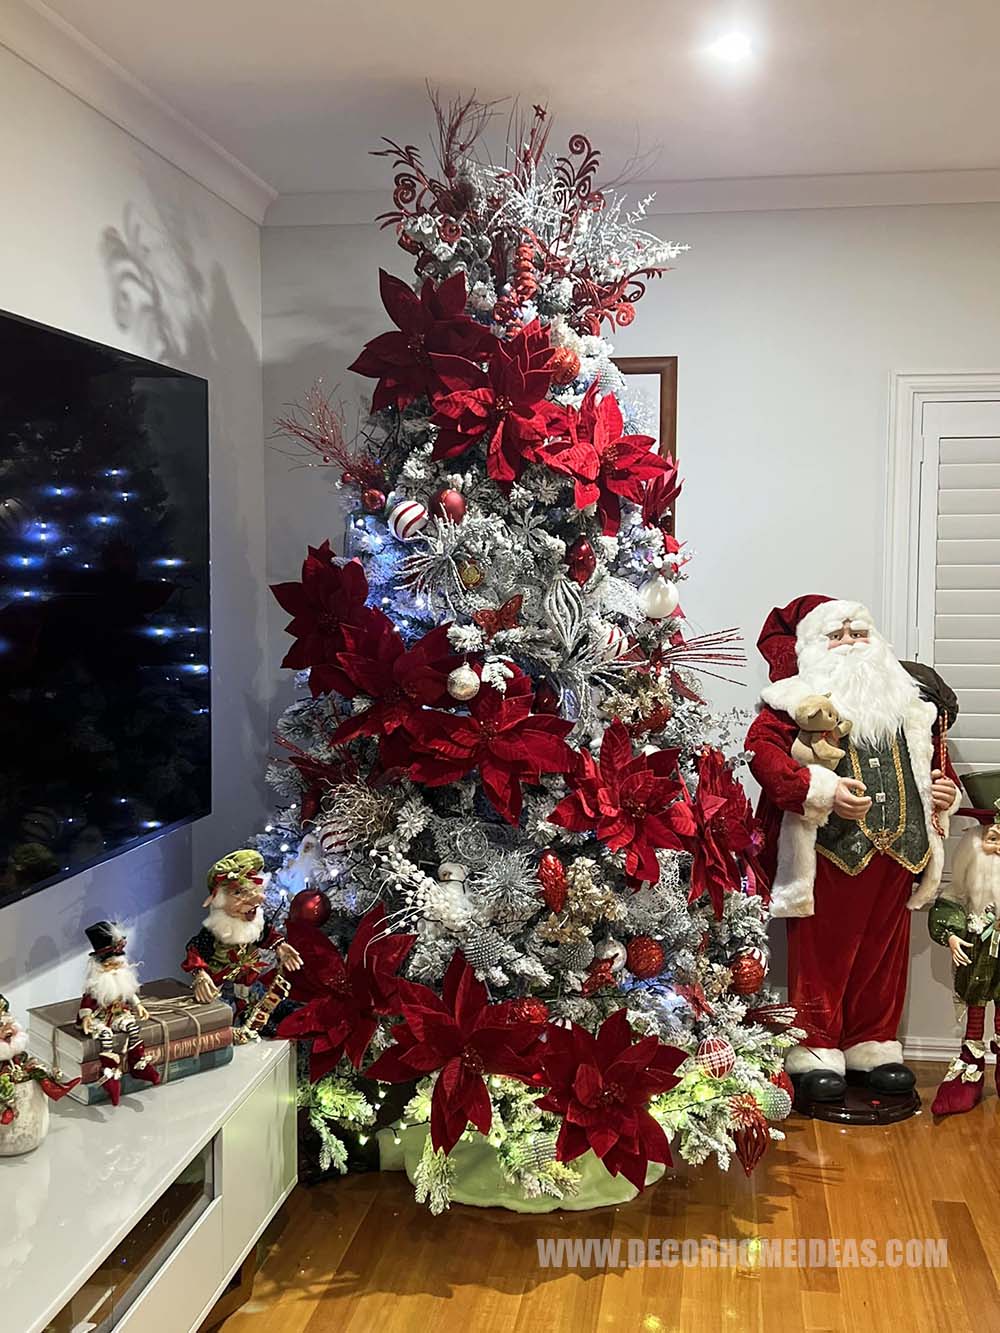 Christmas Star Tree